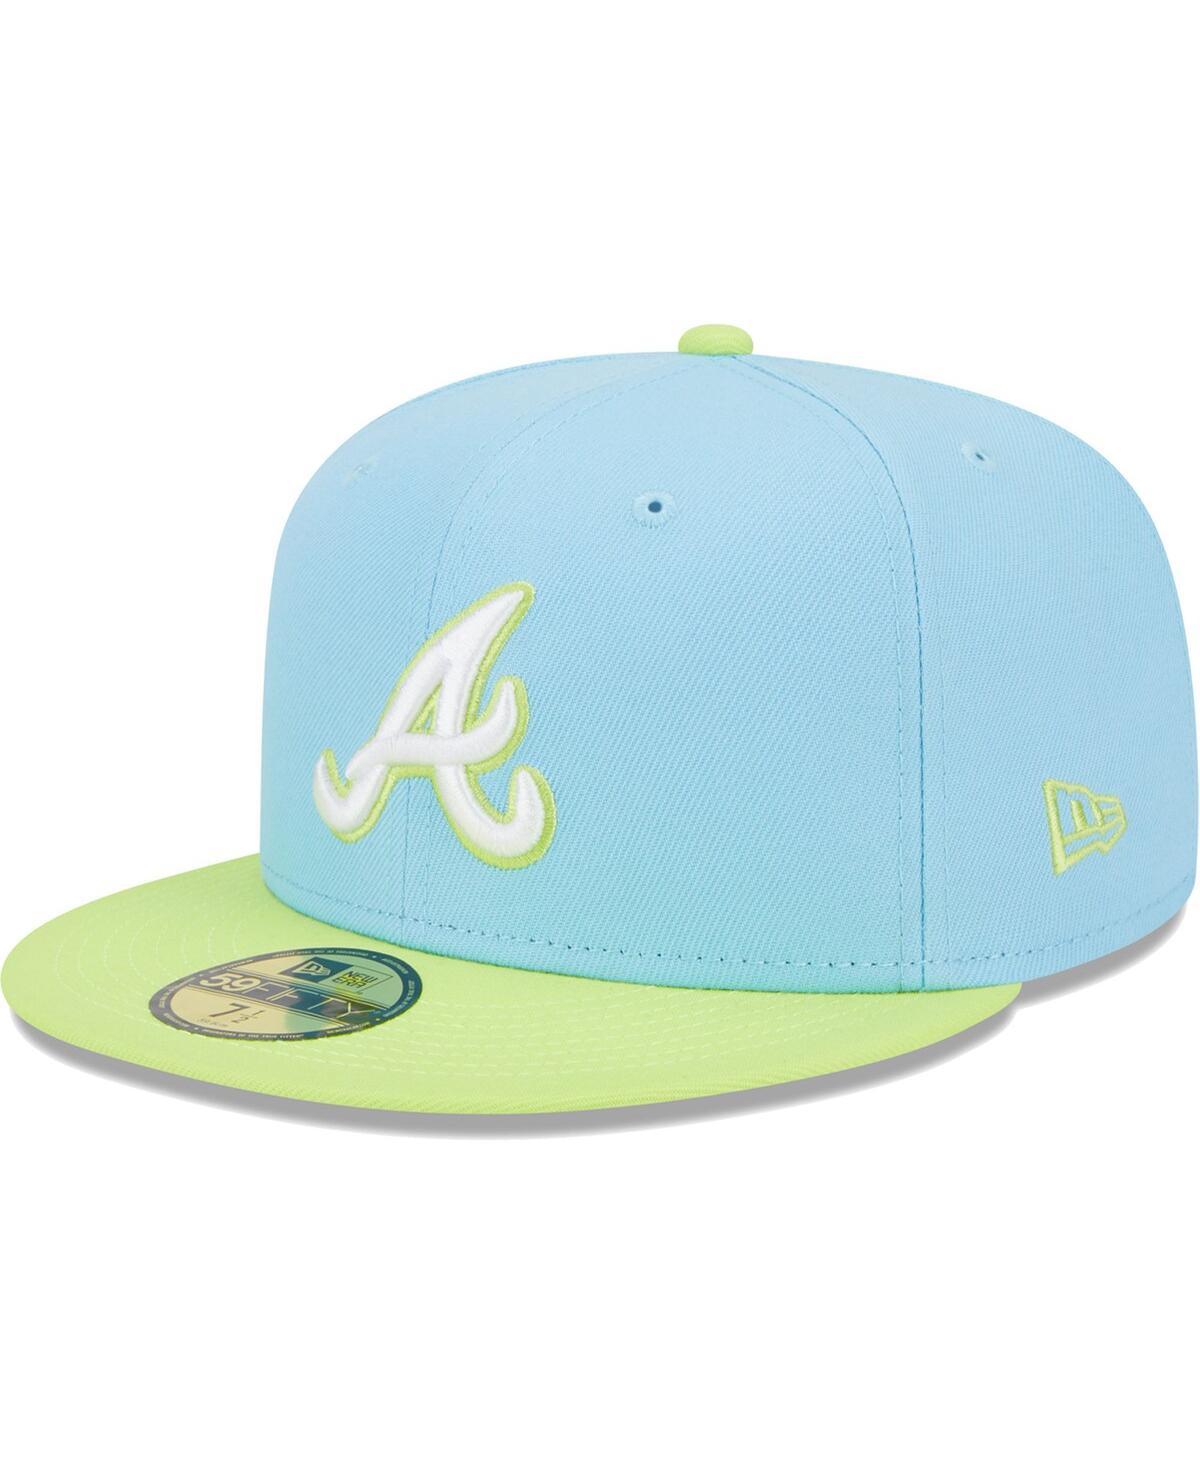 Atlanta Braves New Era Green Undervisor 59FIFTY Fitted Hat - Light